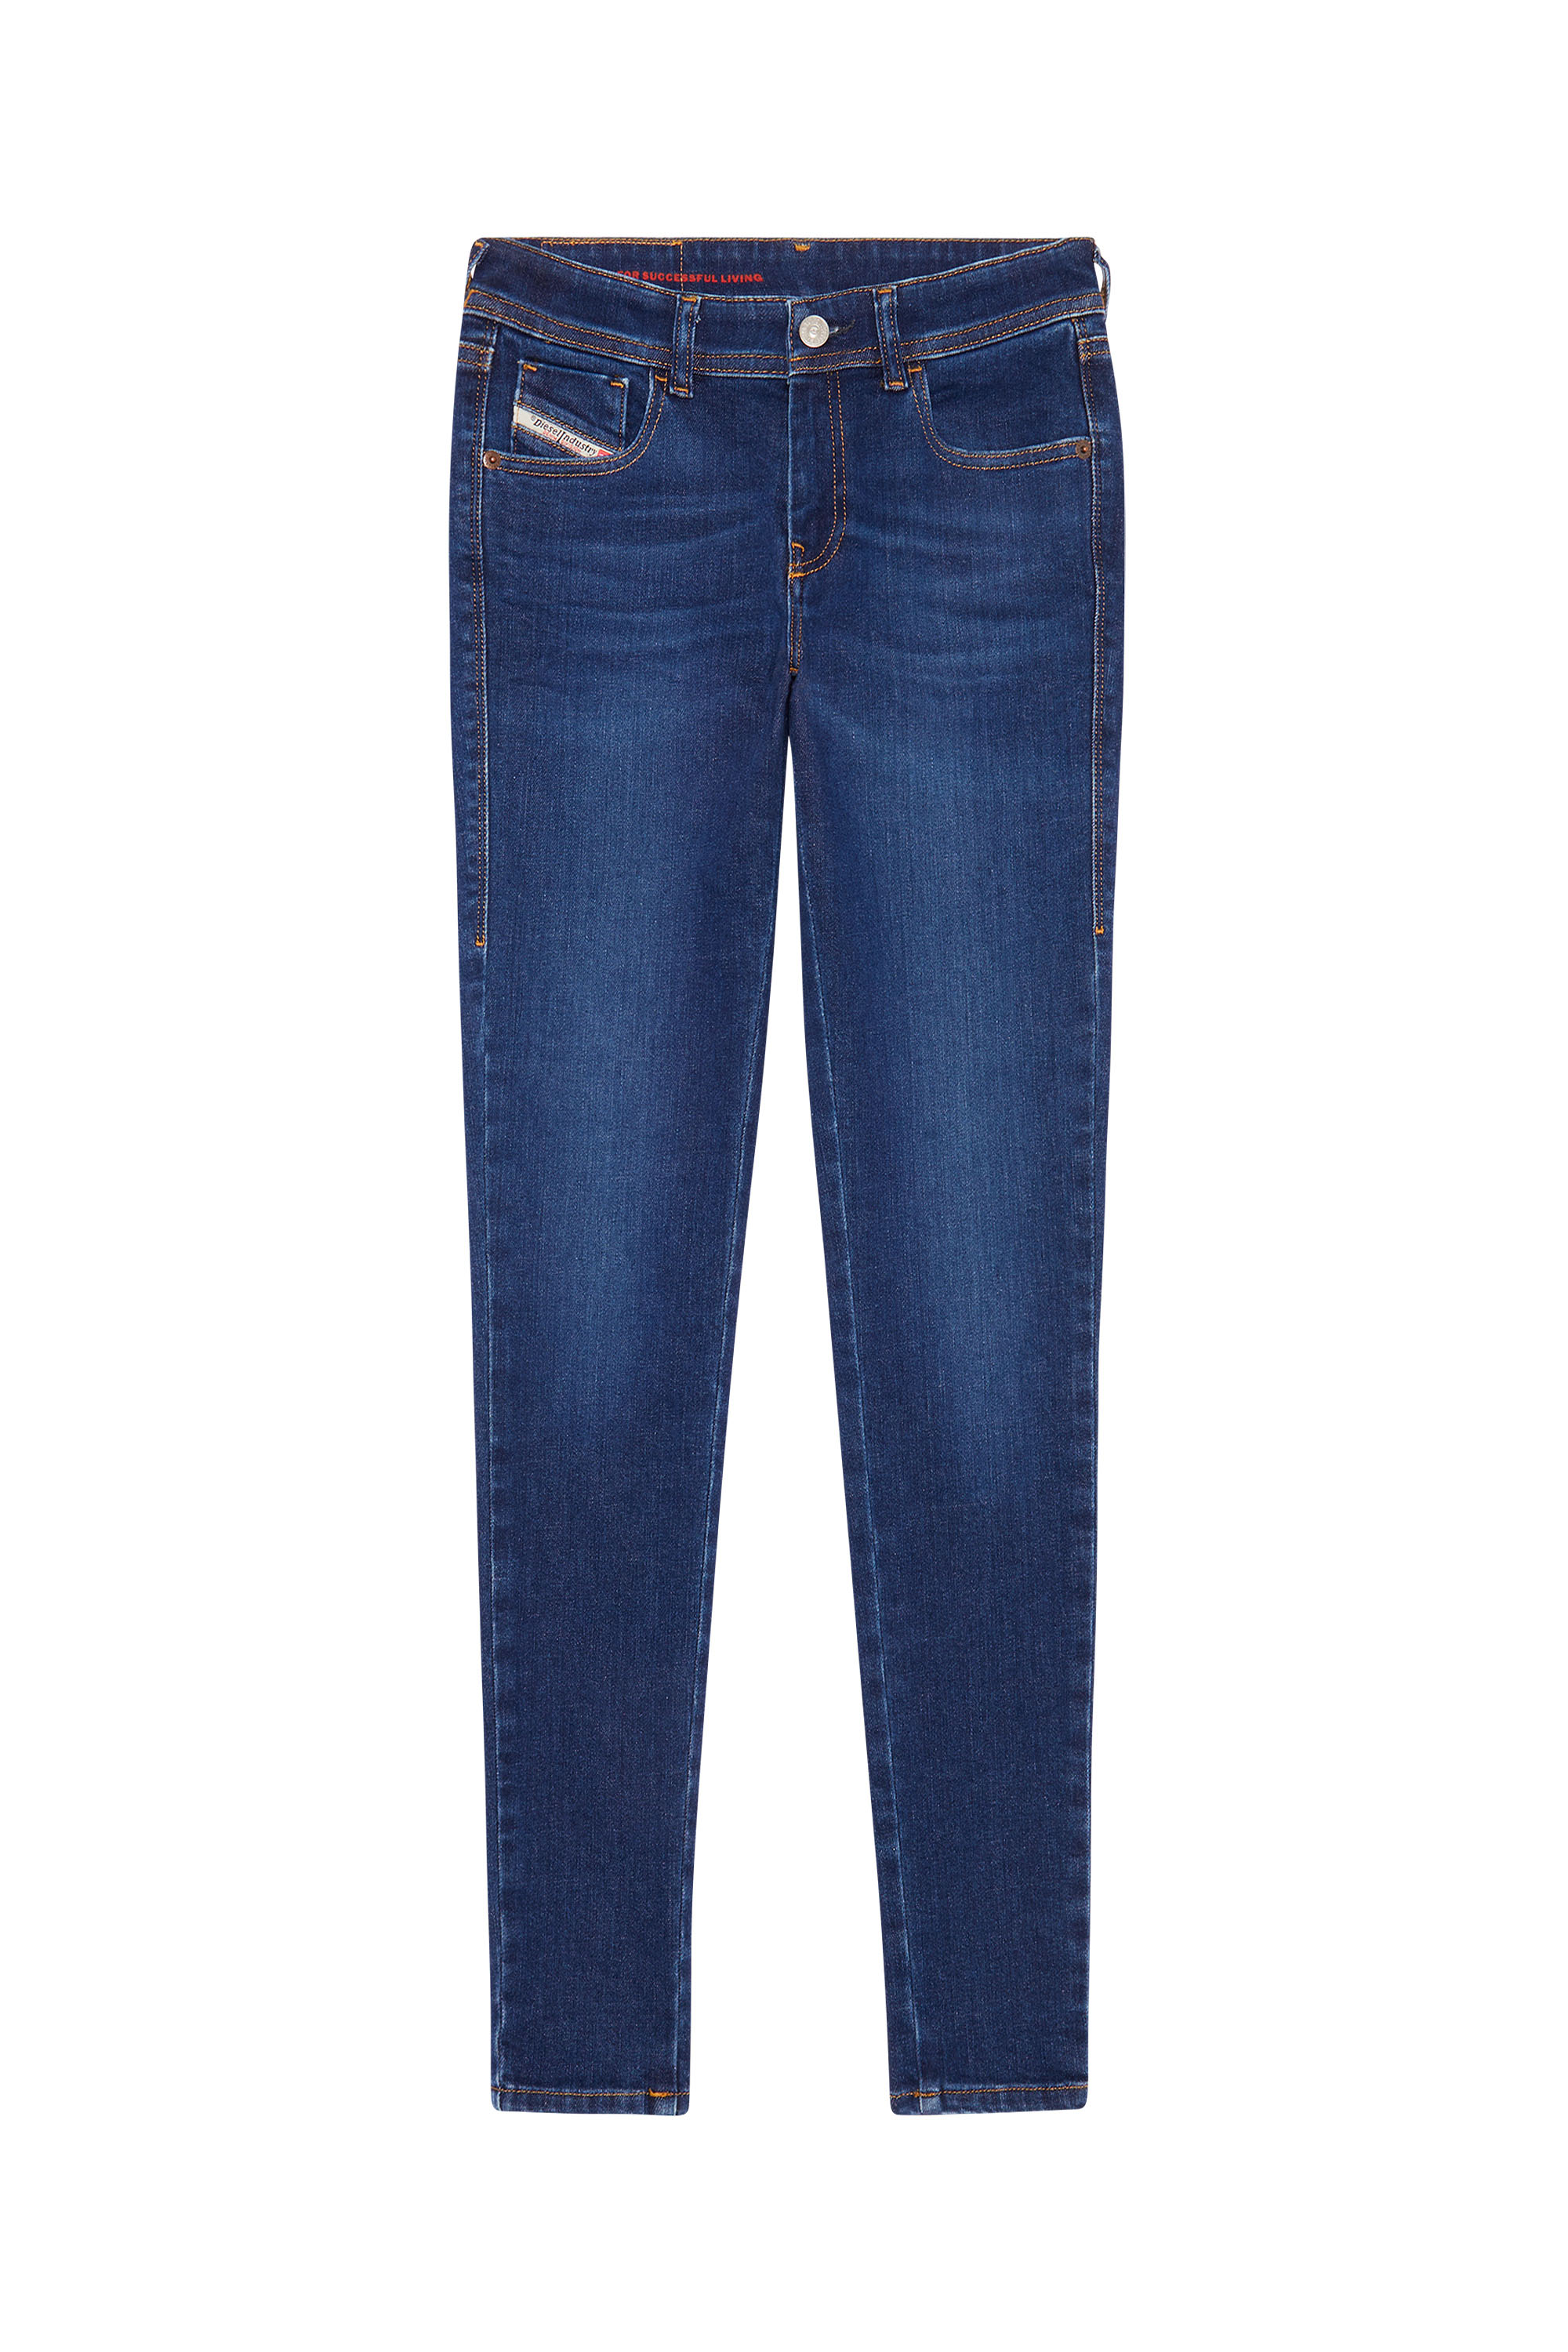 Super skinny Jeans 2018 Slandy-Low 09C19, Dark Blue - Jeans